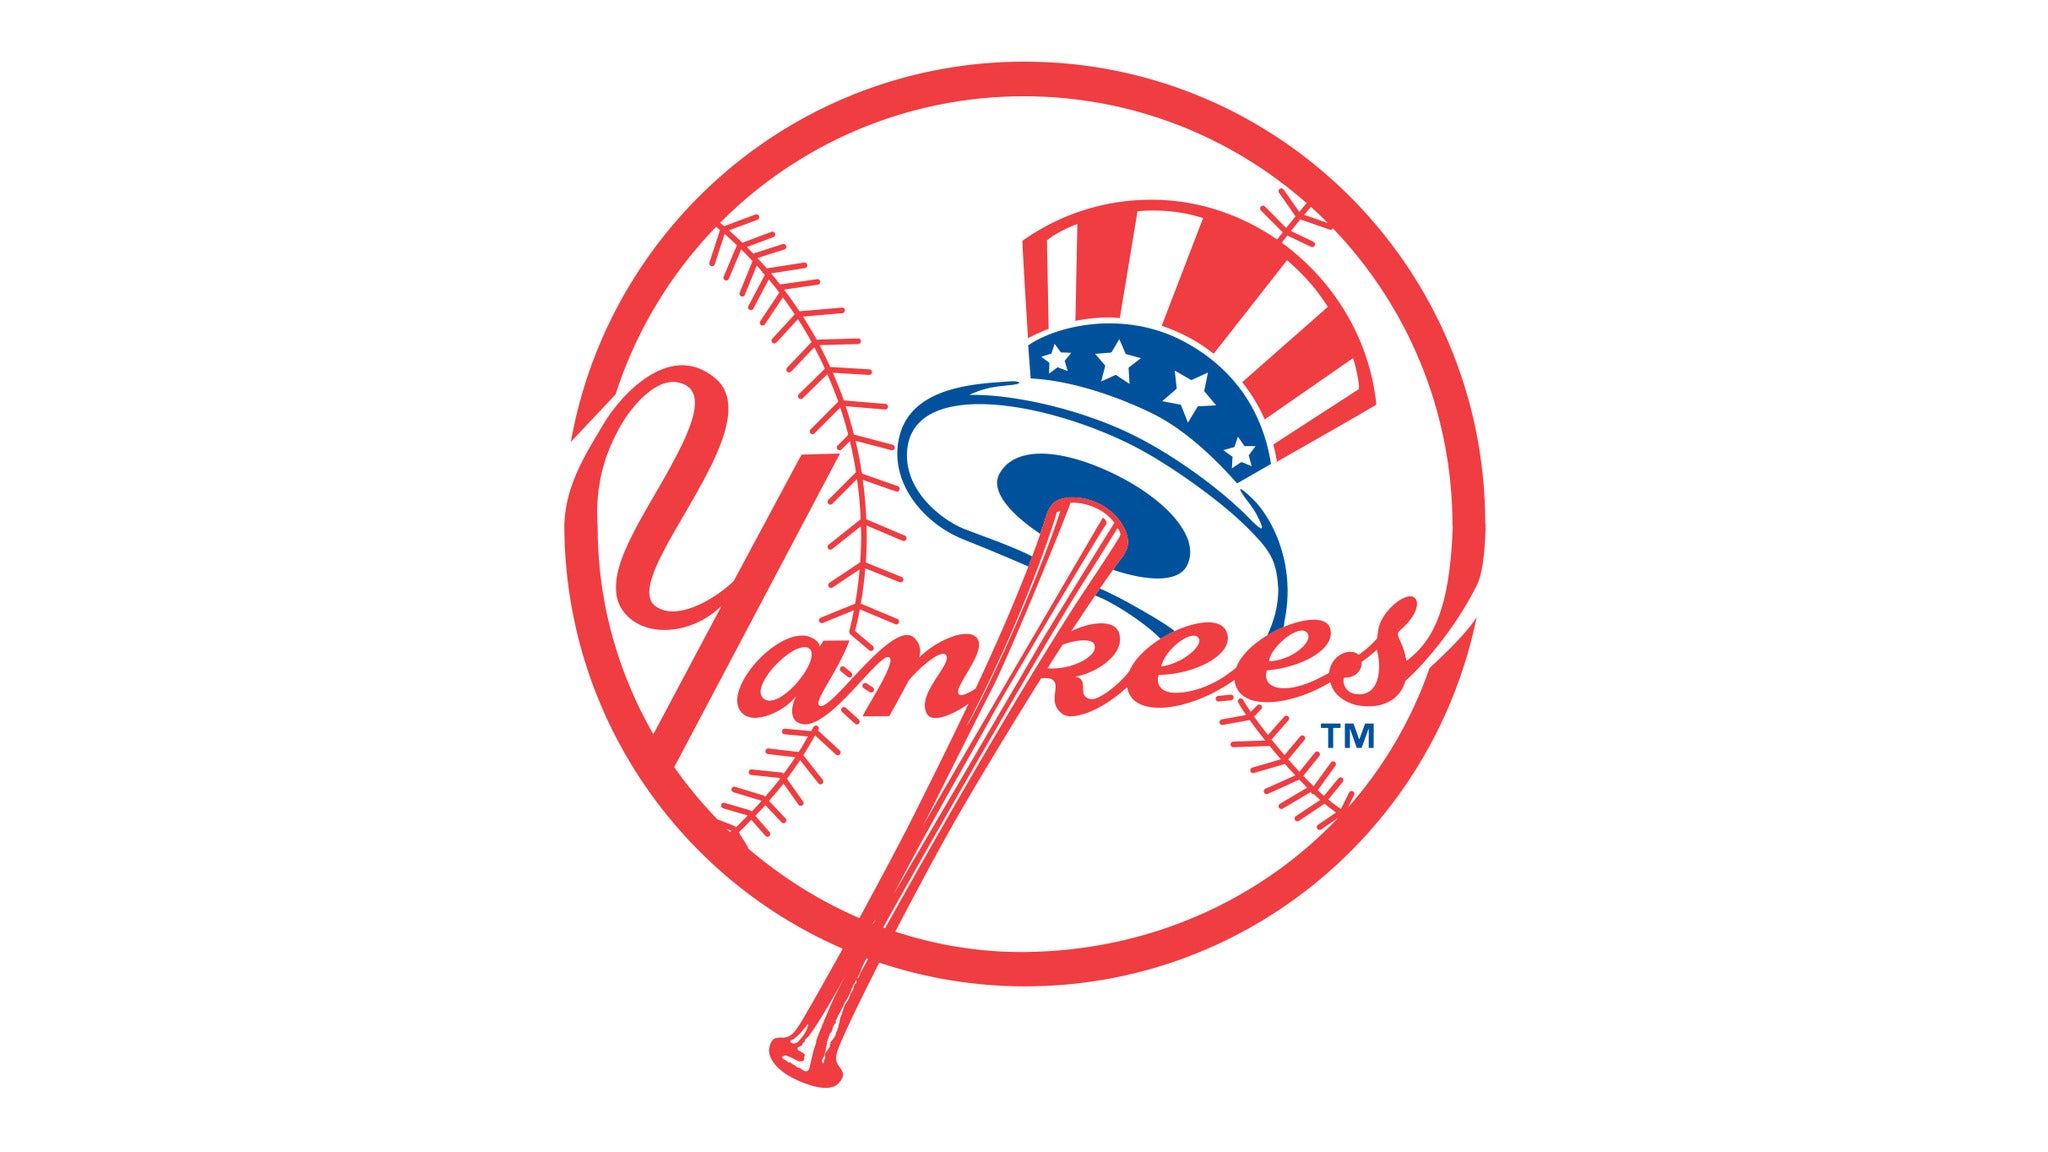 New York Yankees v. Chicago Cubs